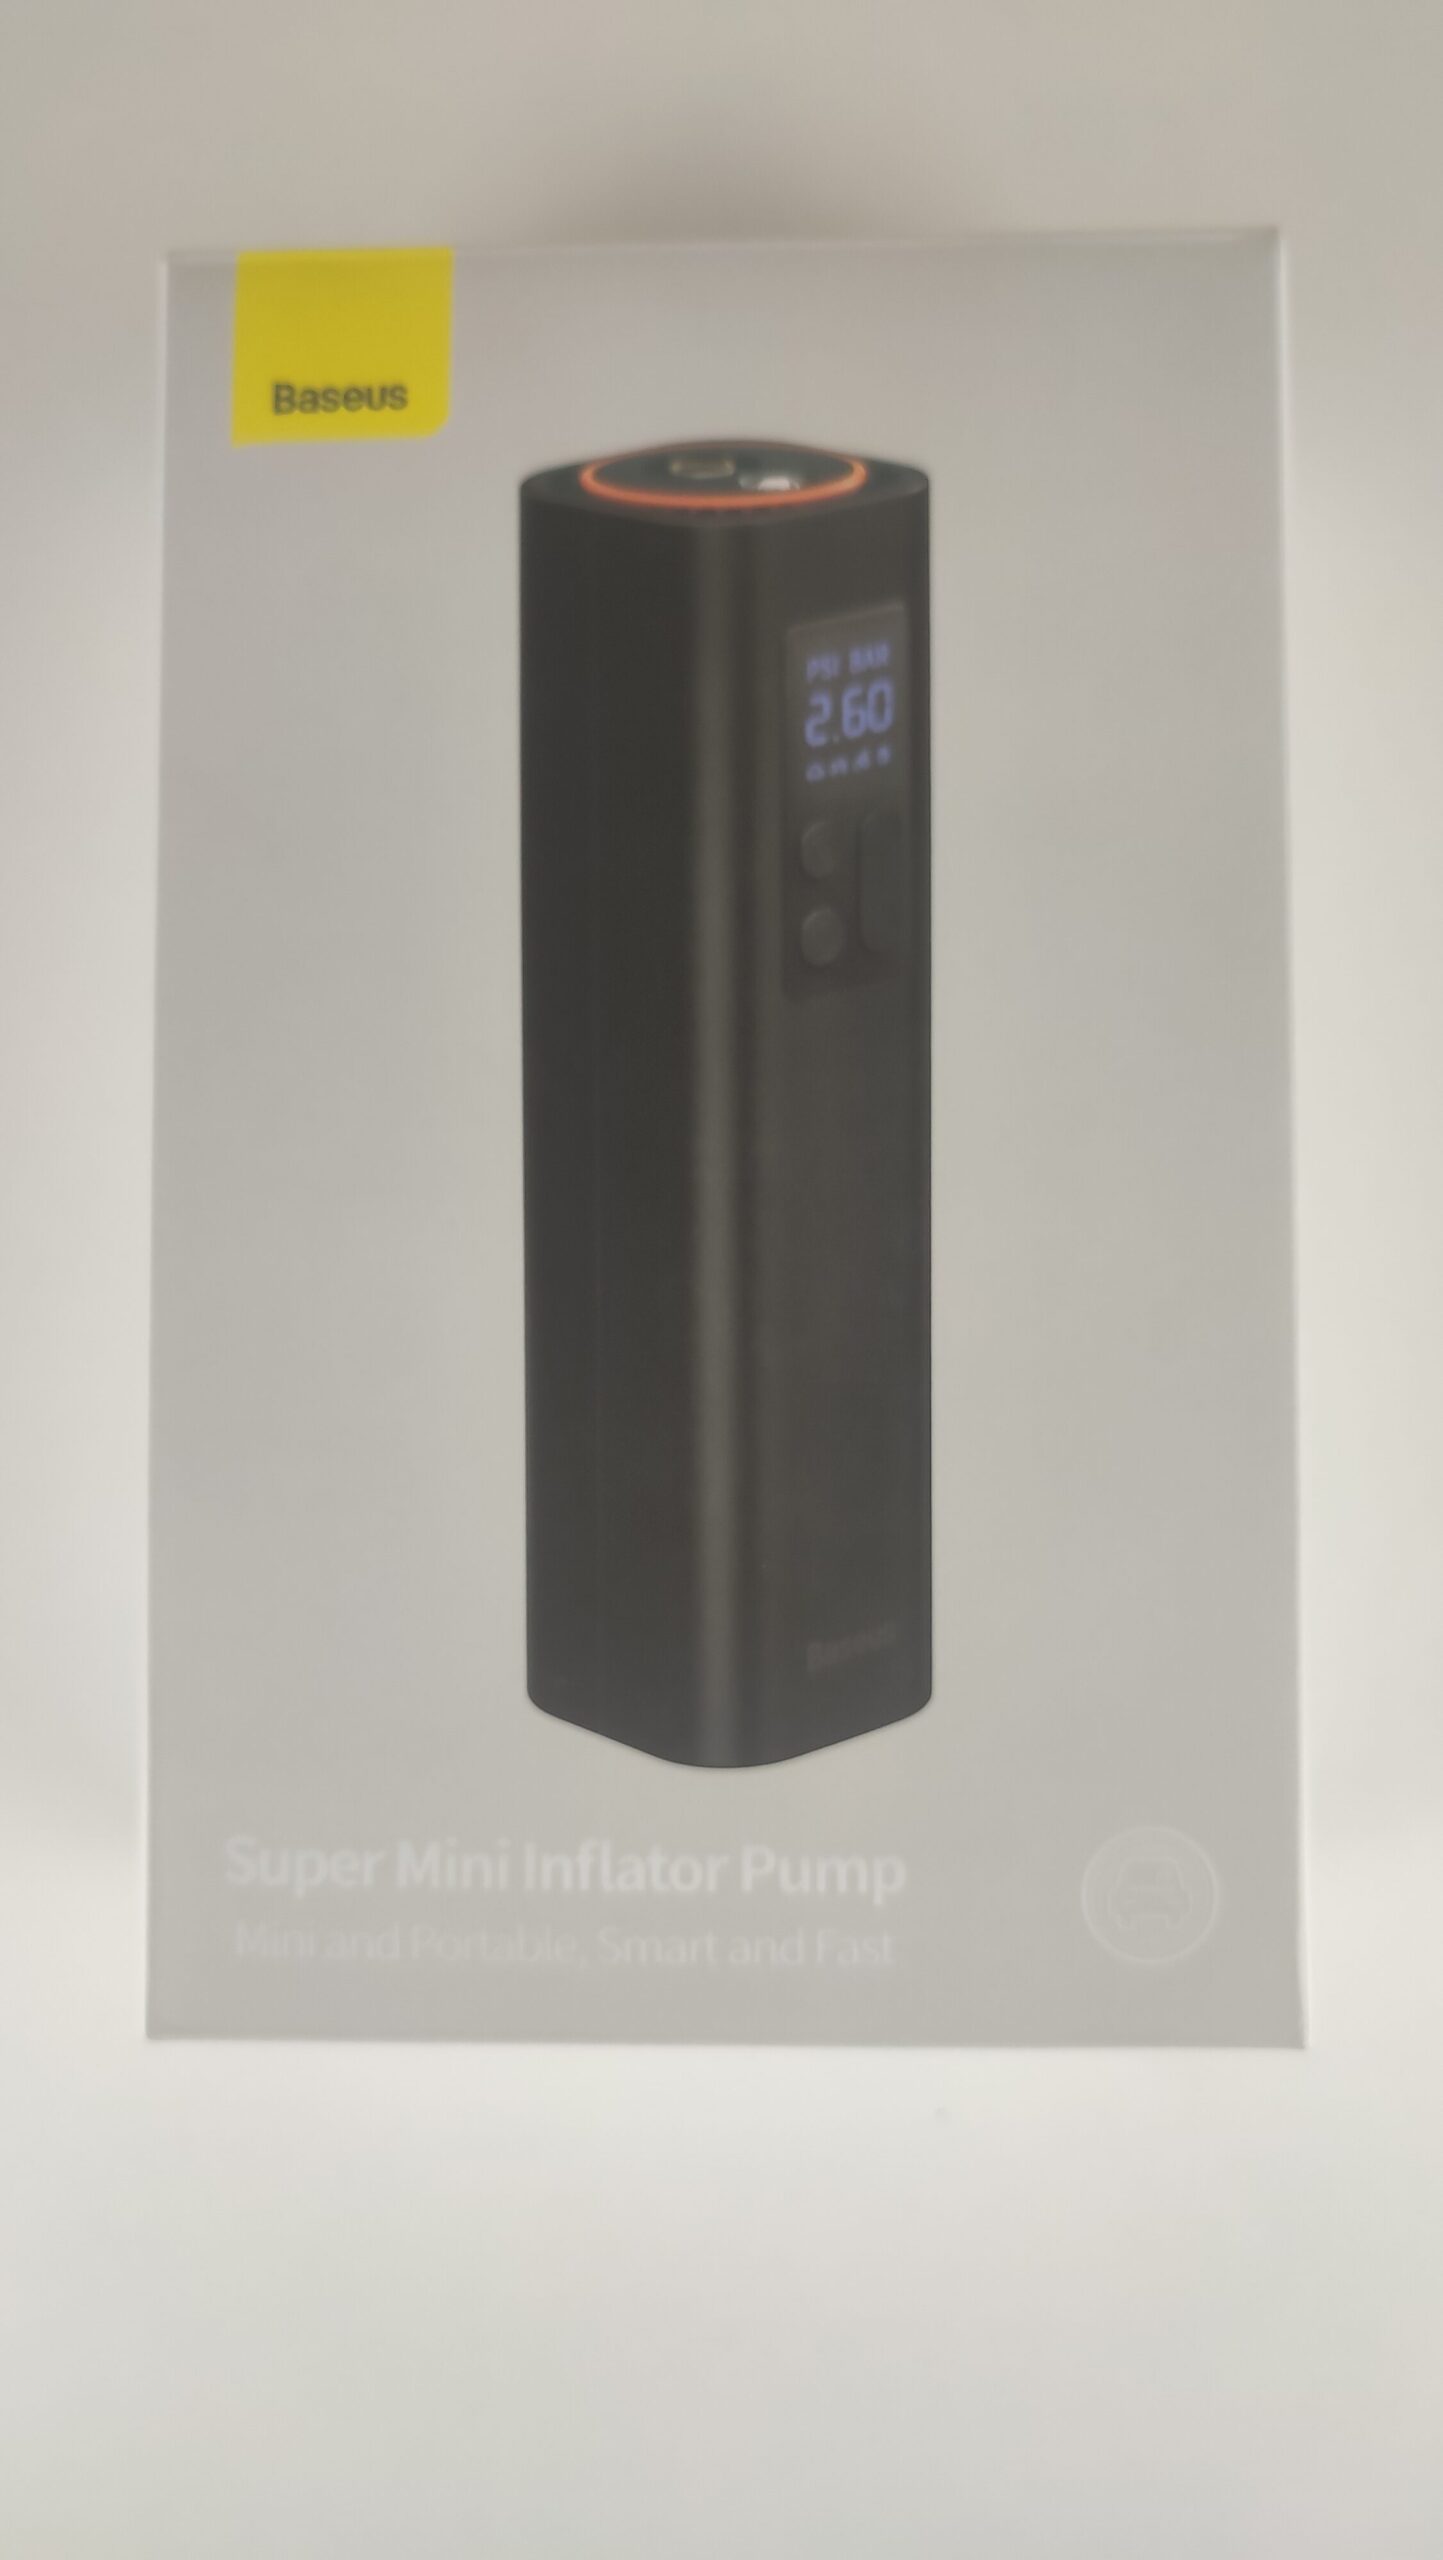 Baseus Super Mini Inflator Pump -nim napompujesz swoje opony